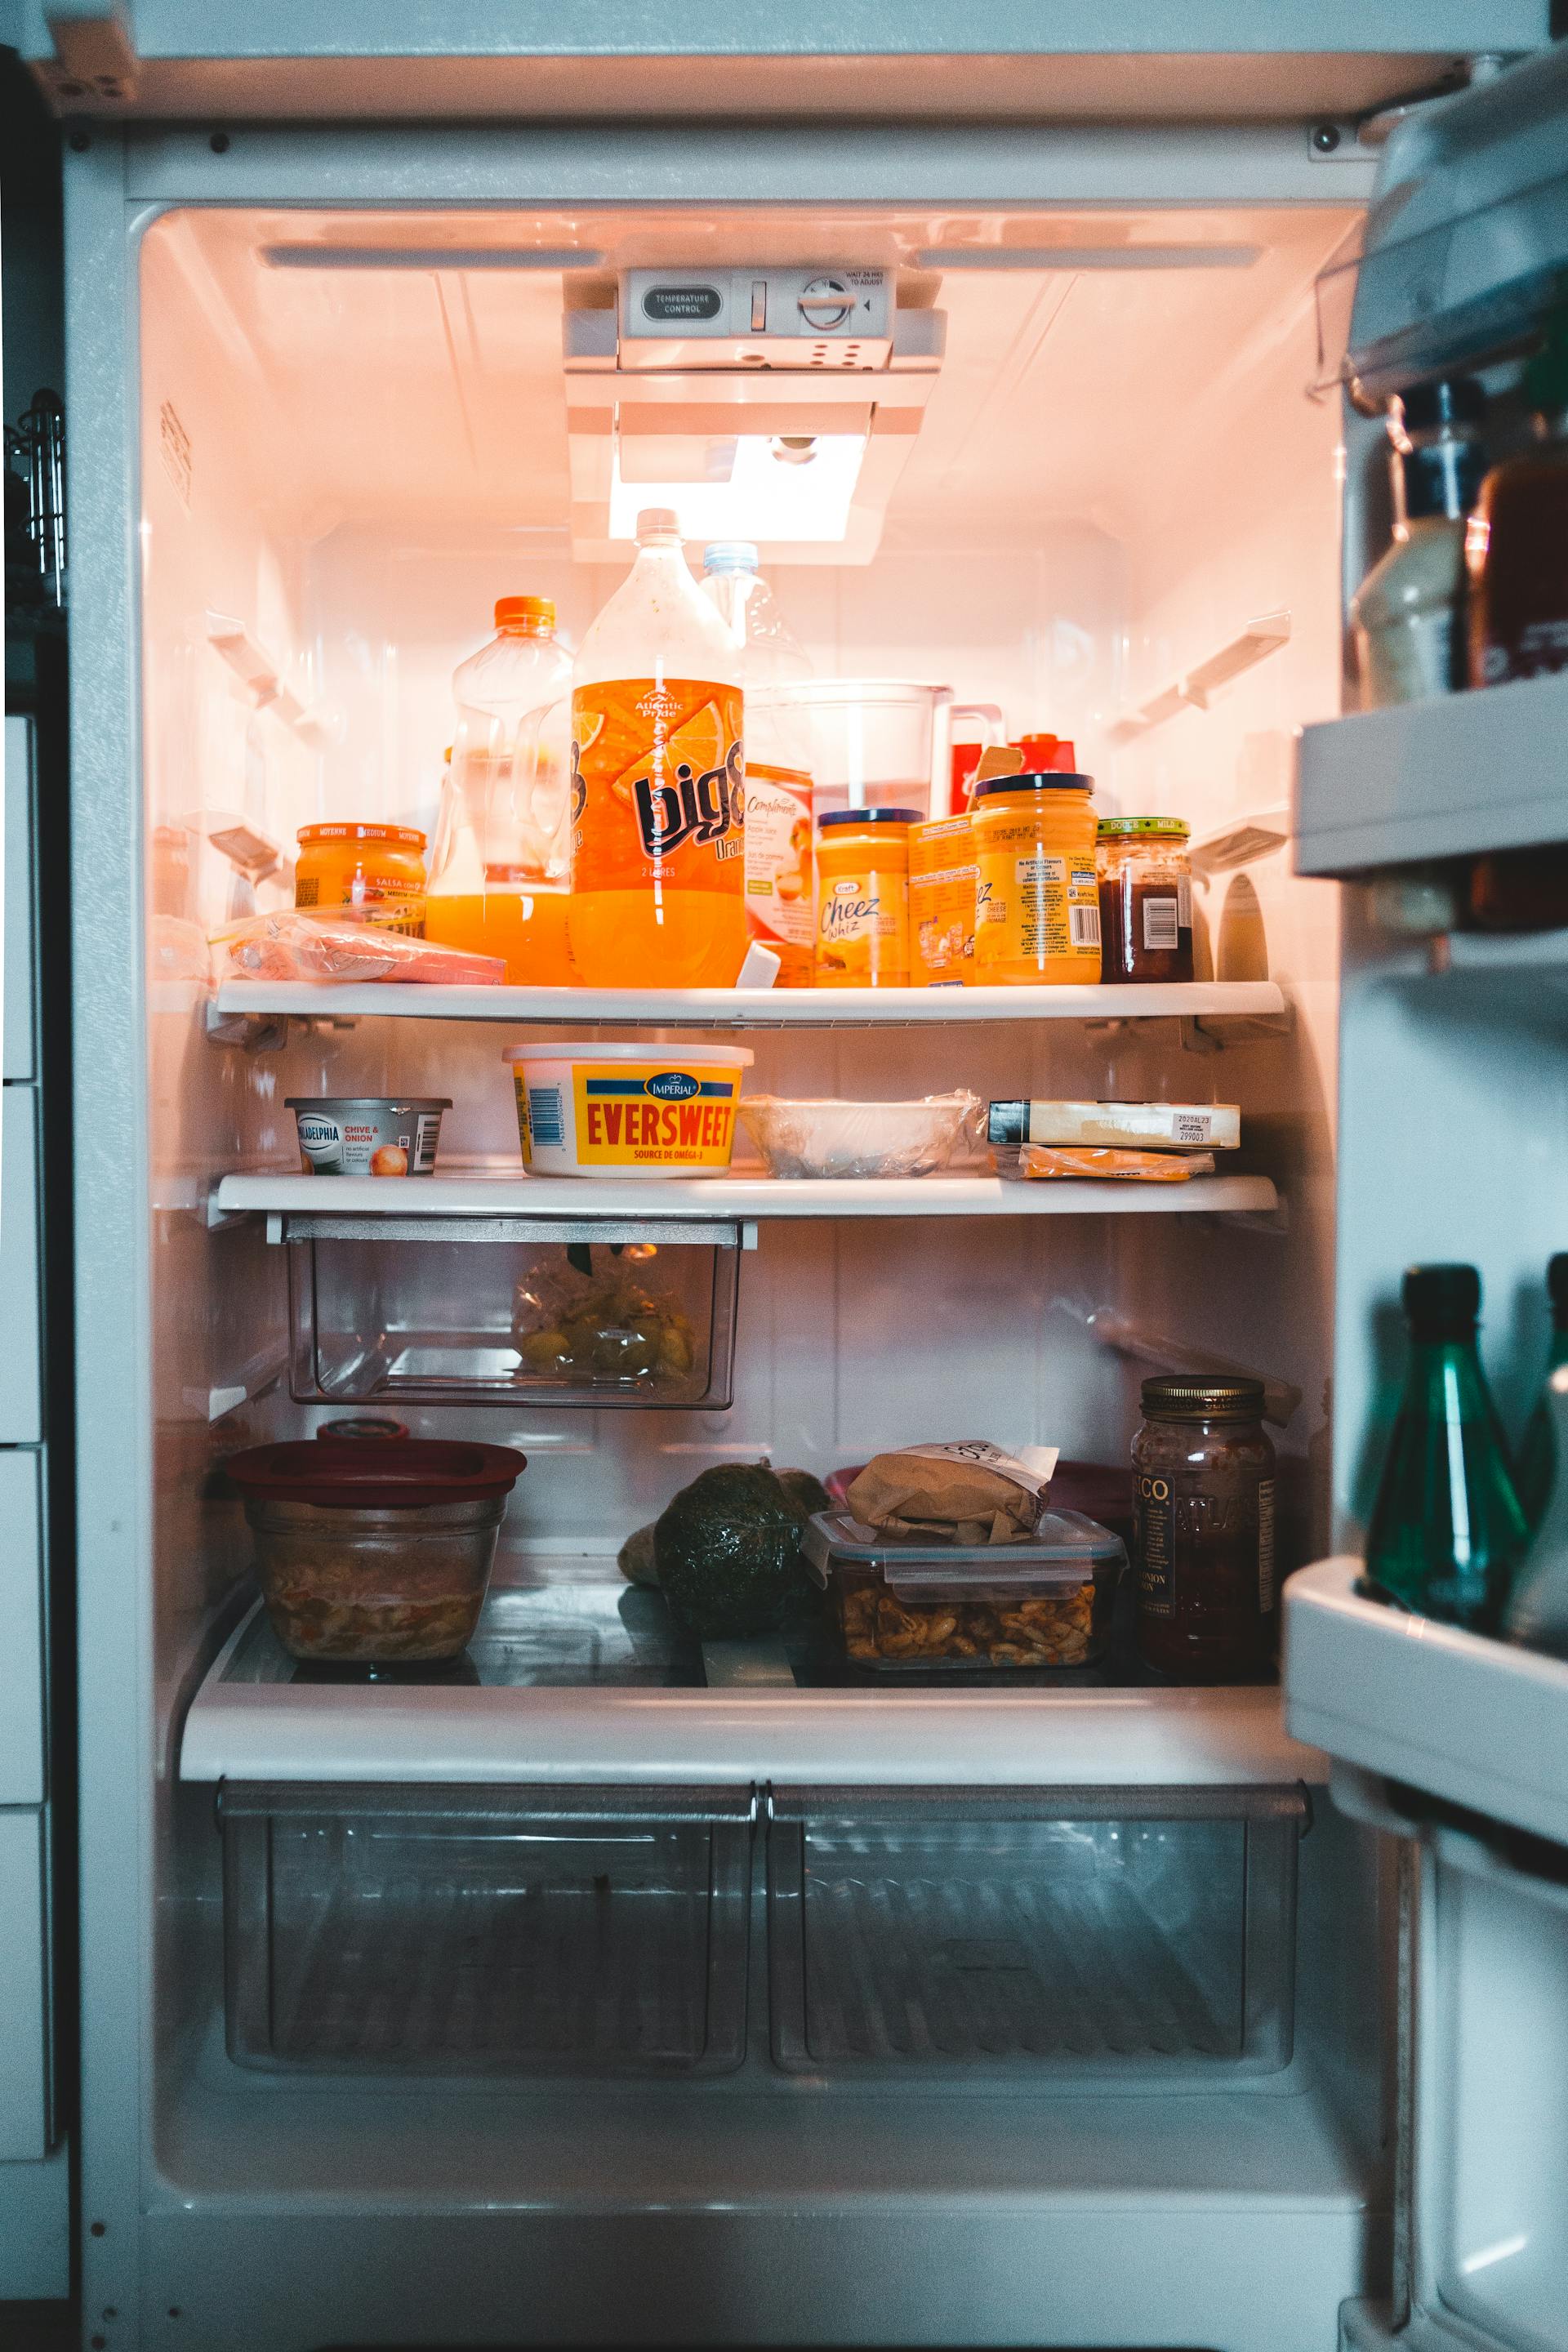 An open fridge | Source: Pexels